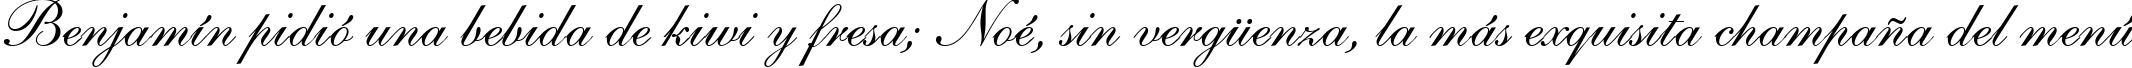 Пример написания шрифтом English 111 Adagio BT текста на испанском